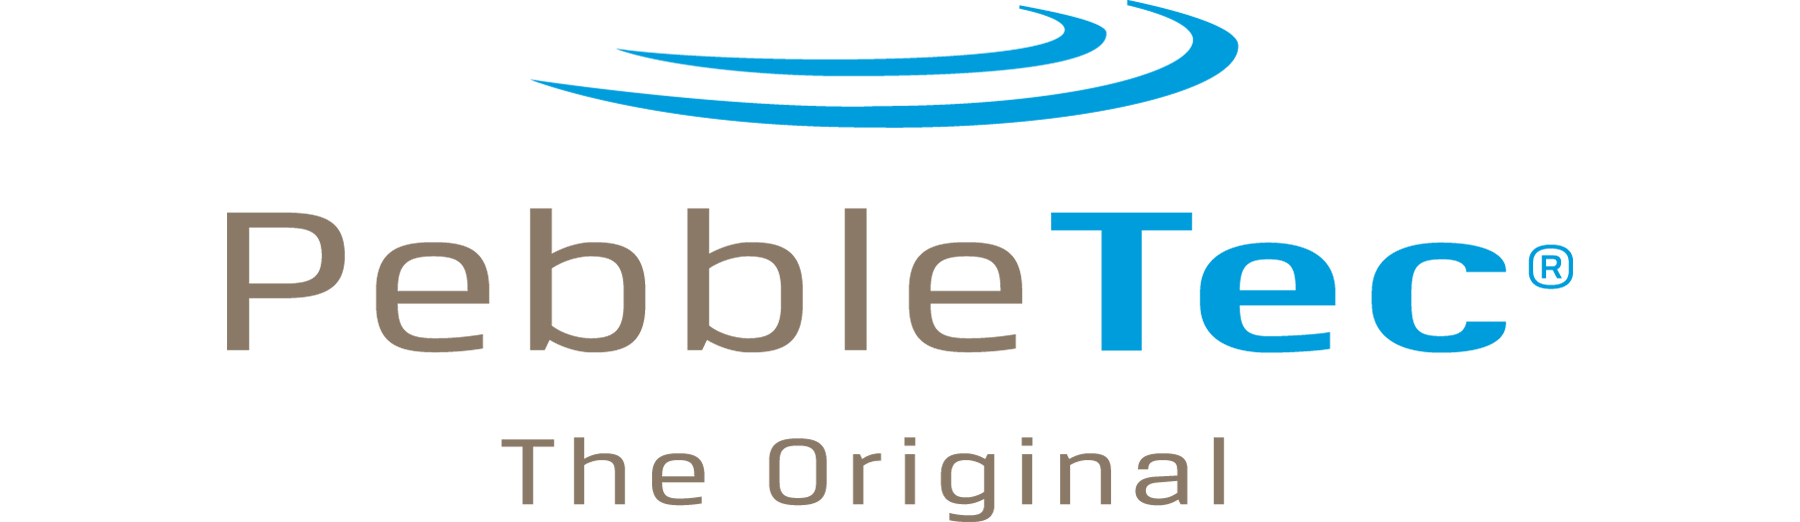 Tec Logo - PebbleTec-logo-v3 - Pebble Tec